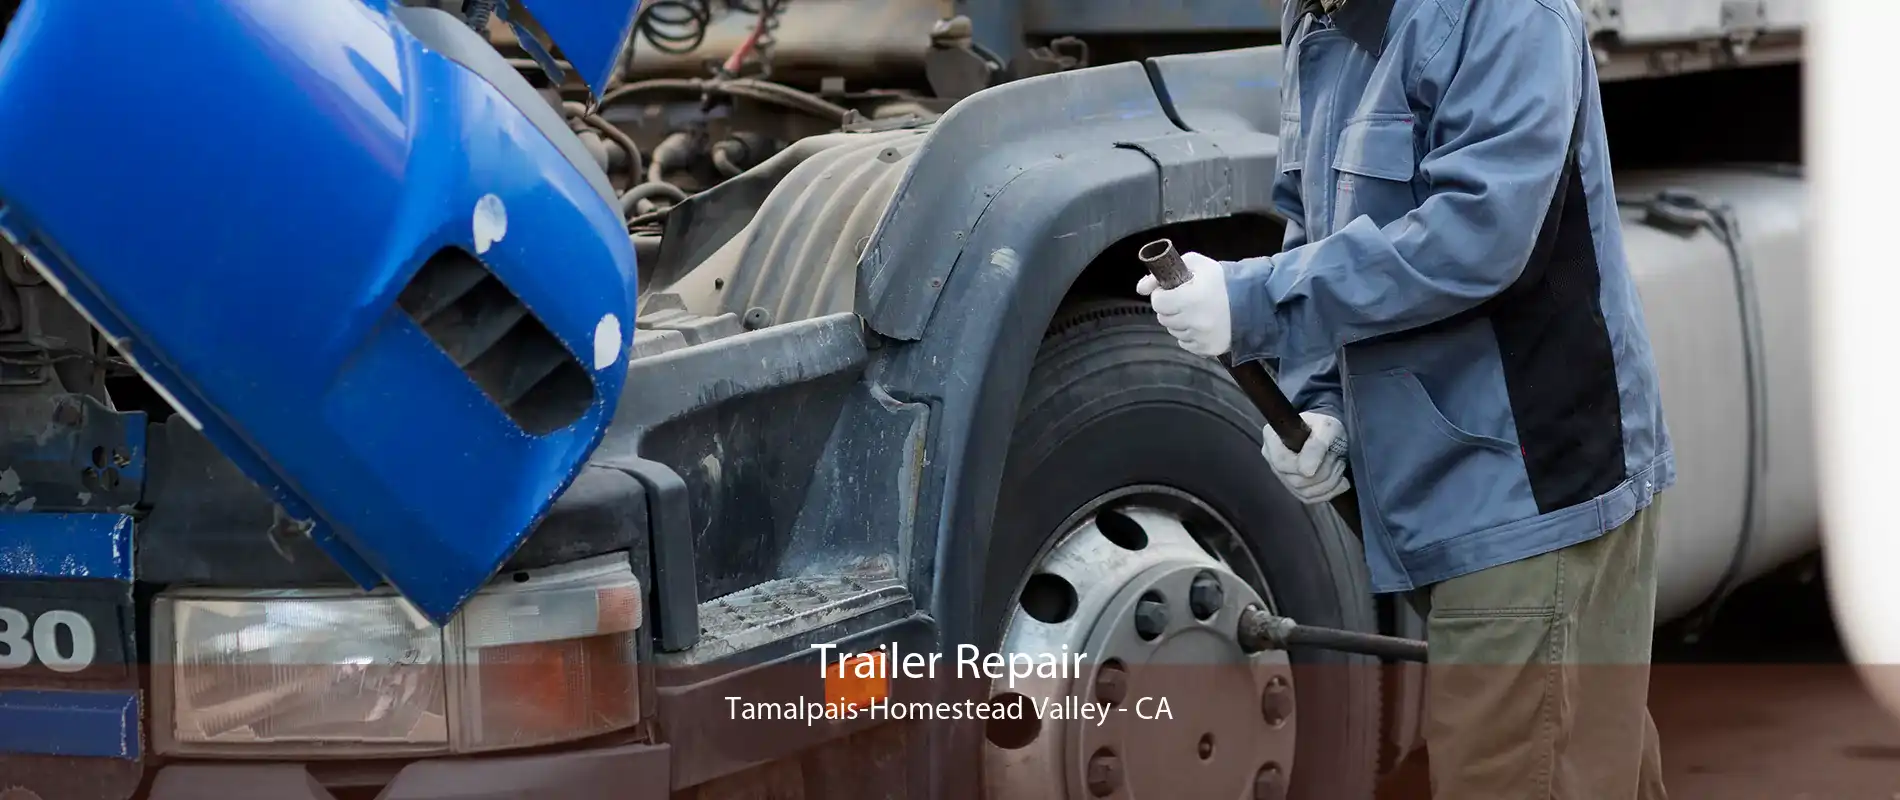 Trailer Repair Tamalpais-Homestead Valley - CA